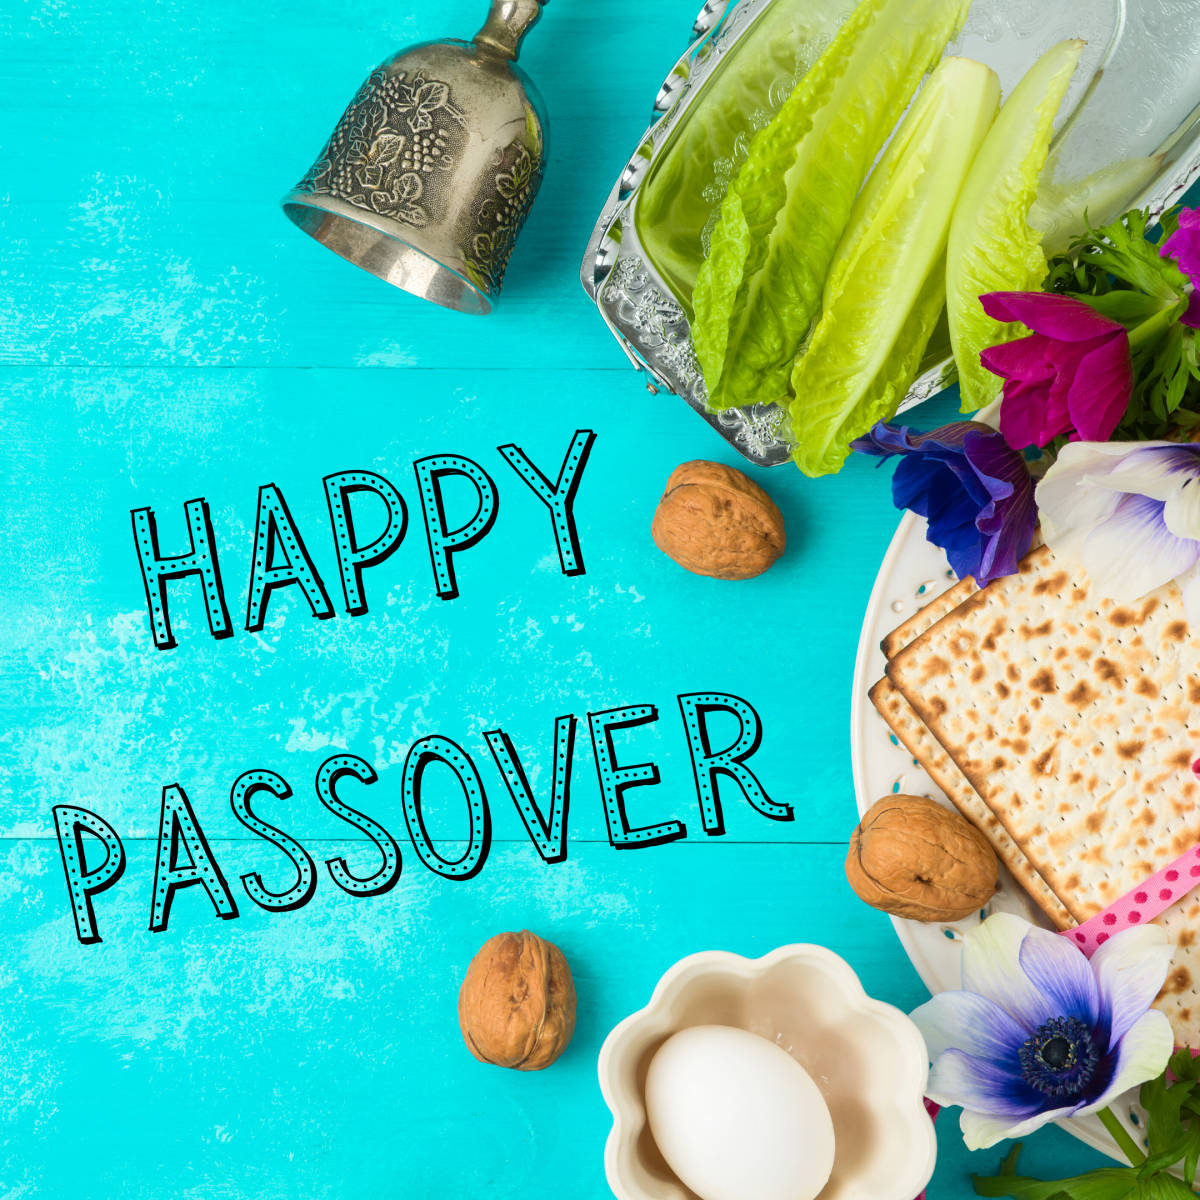 Blue Happy Passover Wallpaper